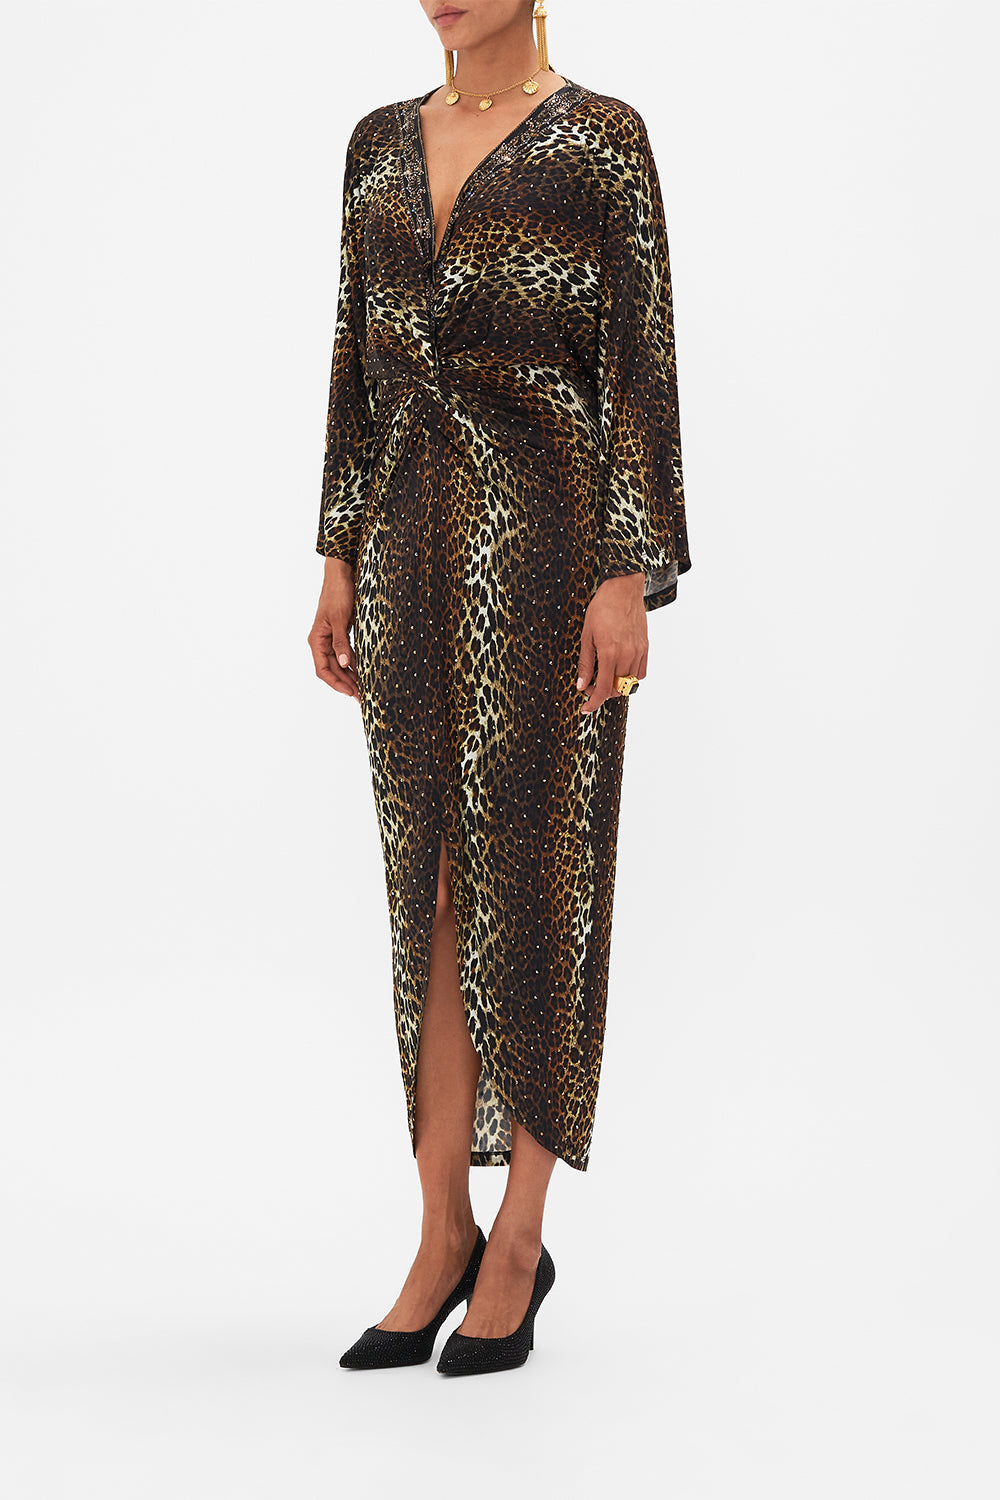 CAMILLA leopard long split-front twist dress in Amsterglam print.